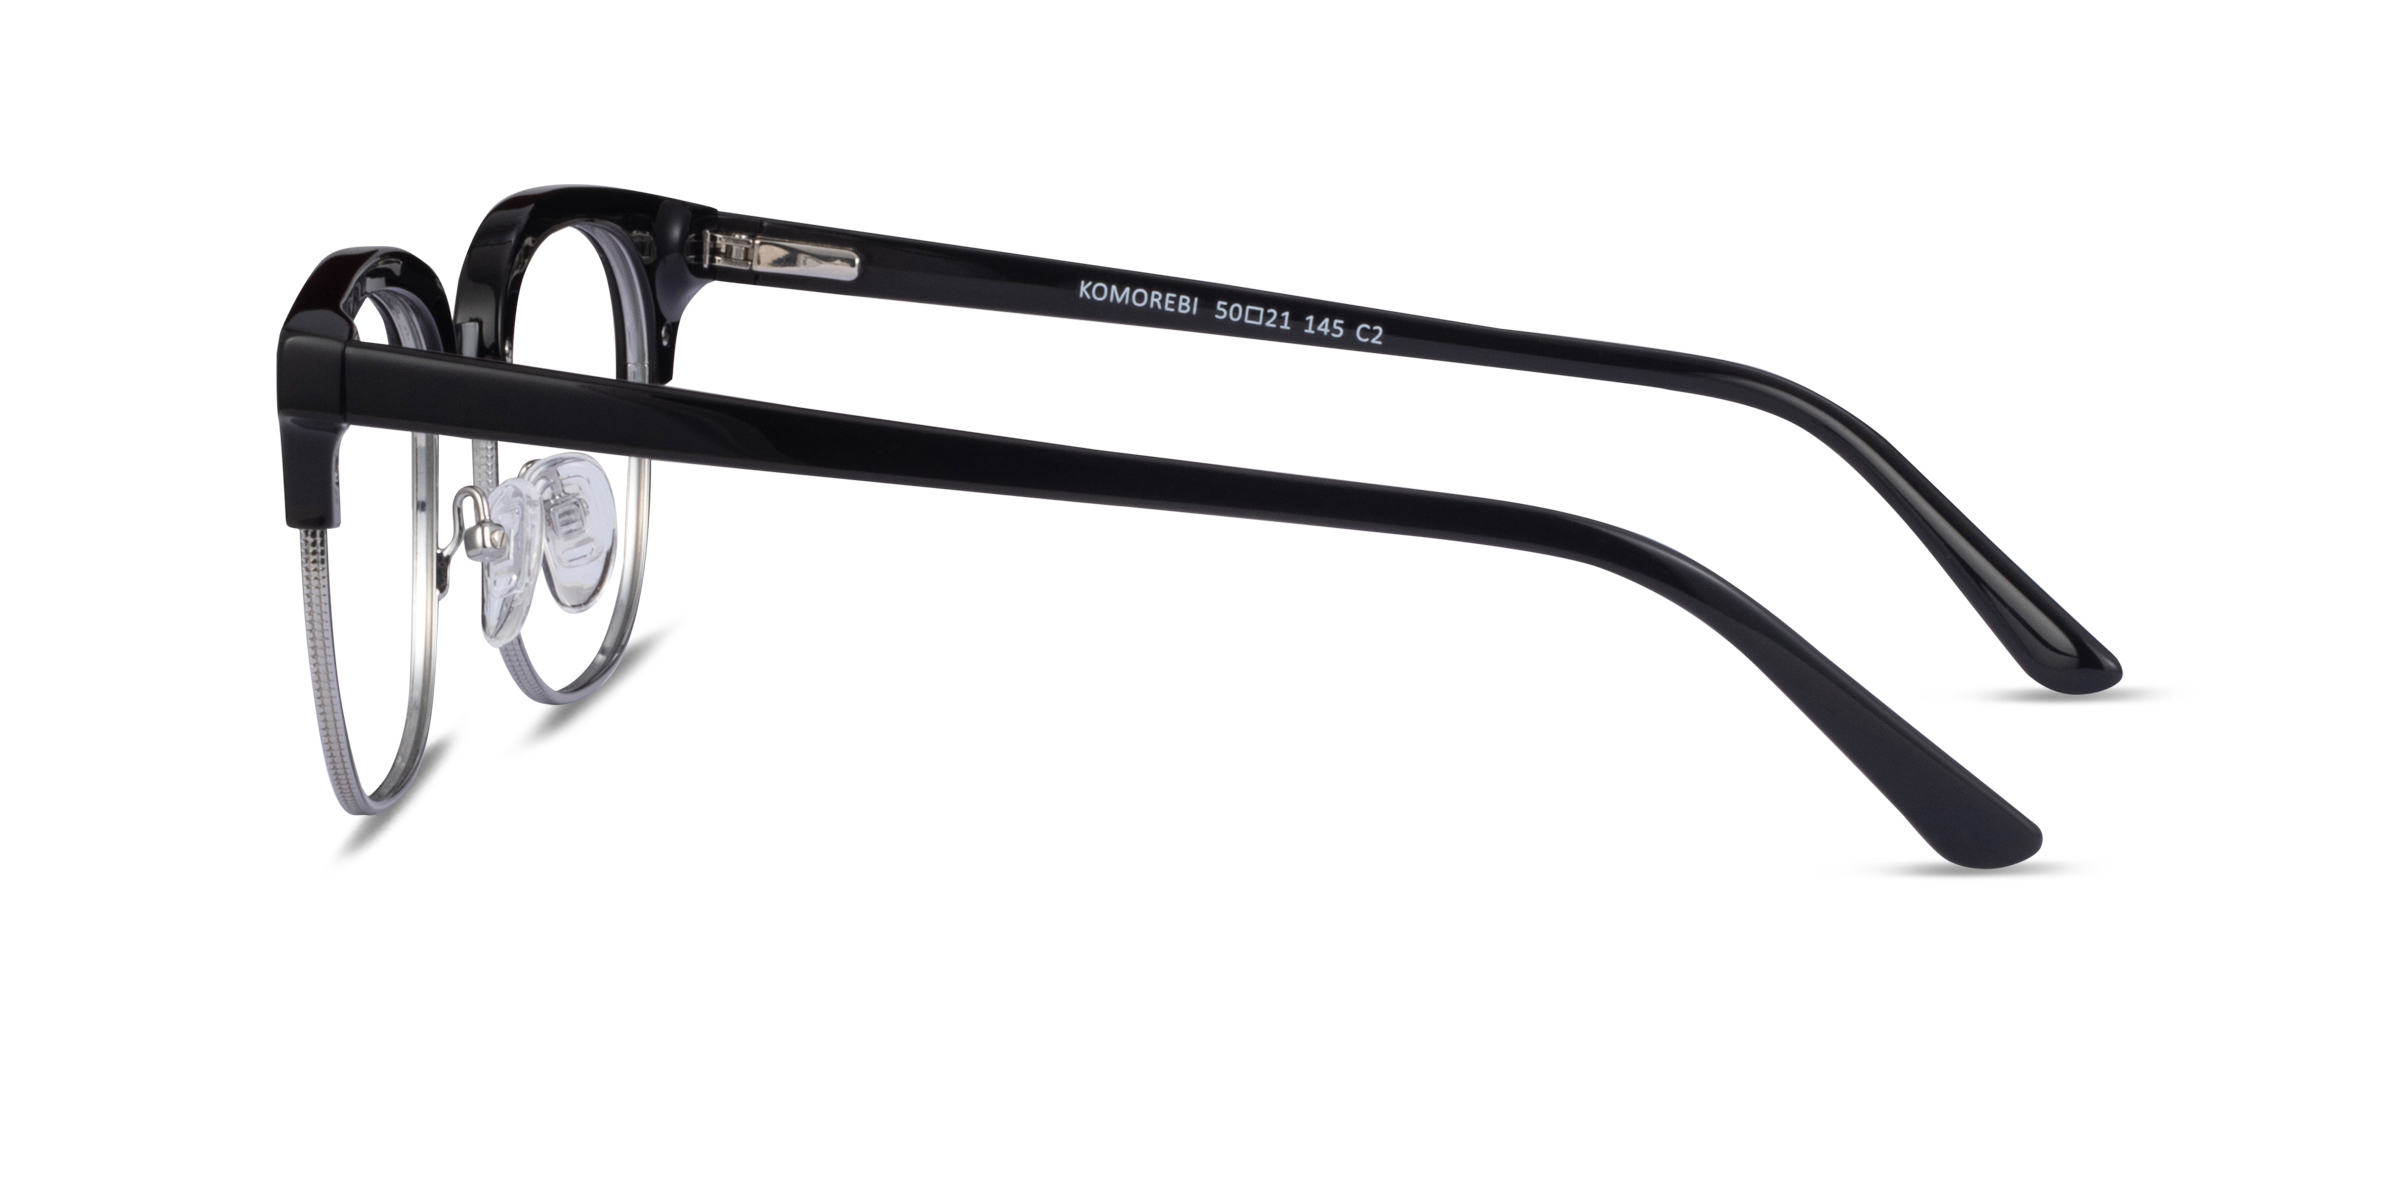 Komorebi Browline Black Silver Full Rim Eyeglasses | Eyebuydirect